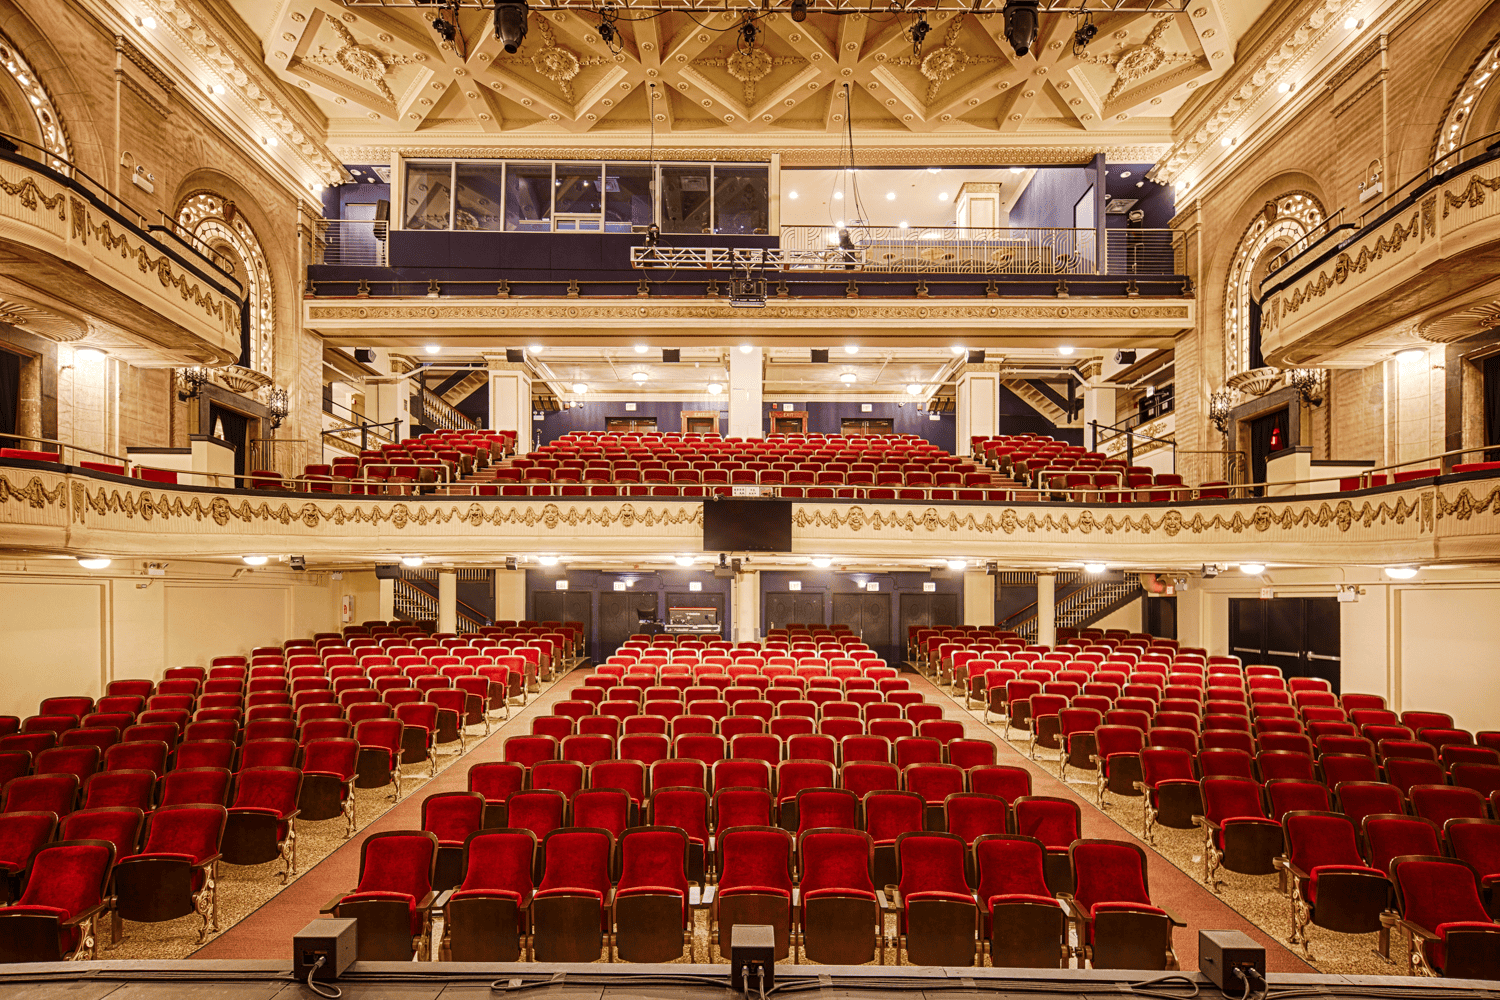 Image Description: The Studebaker Theater auditorium.